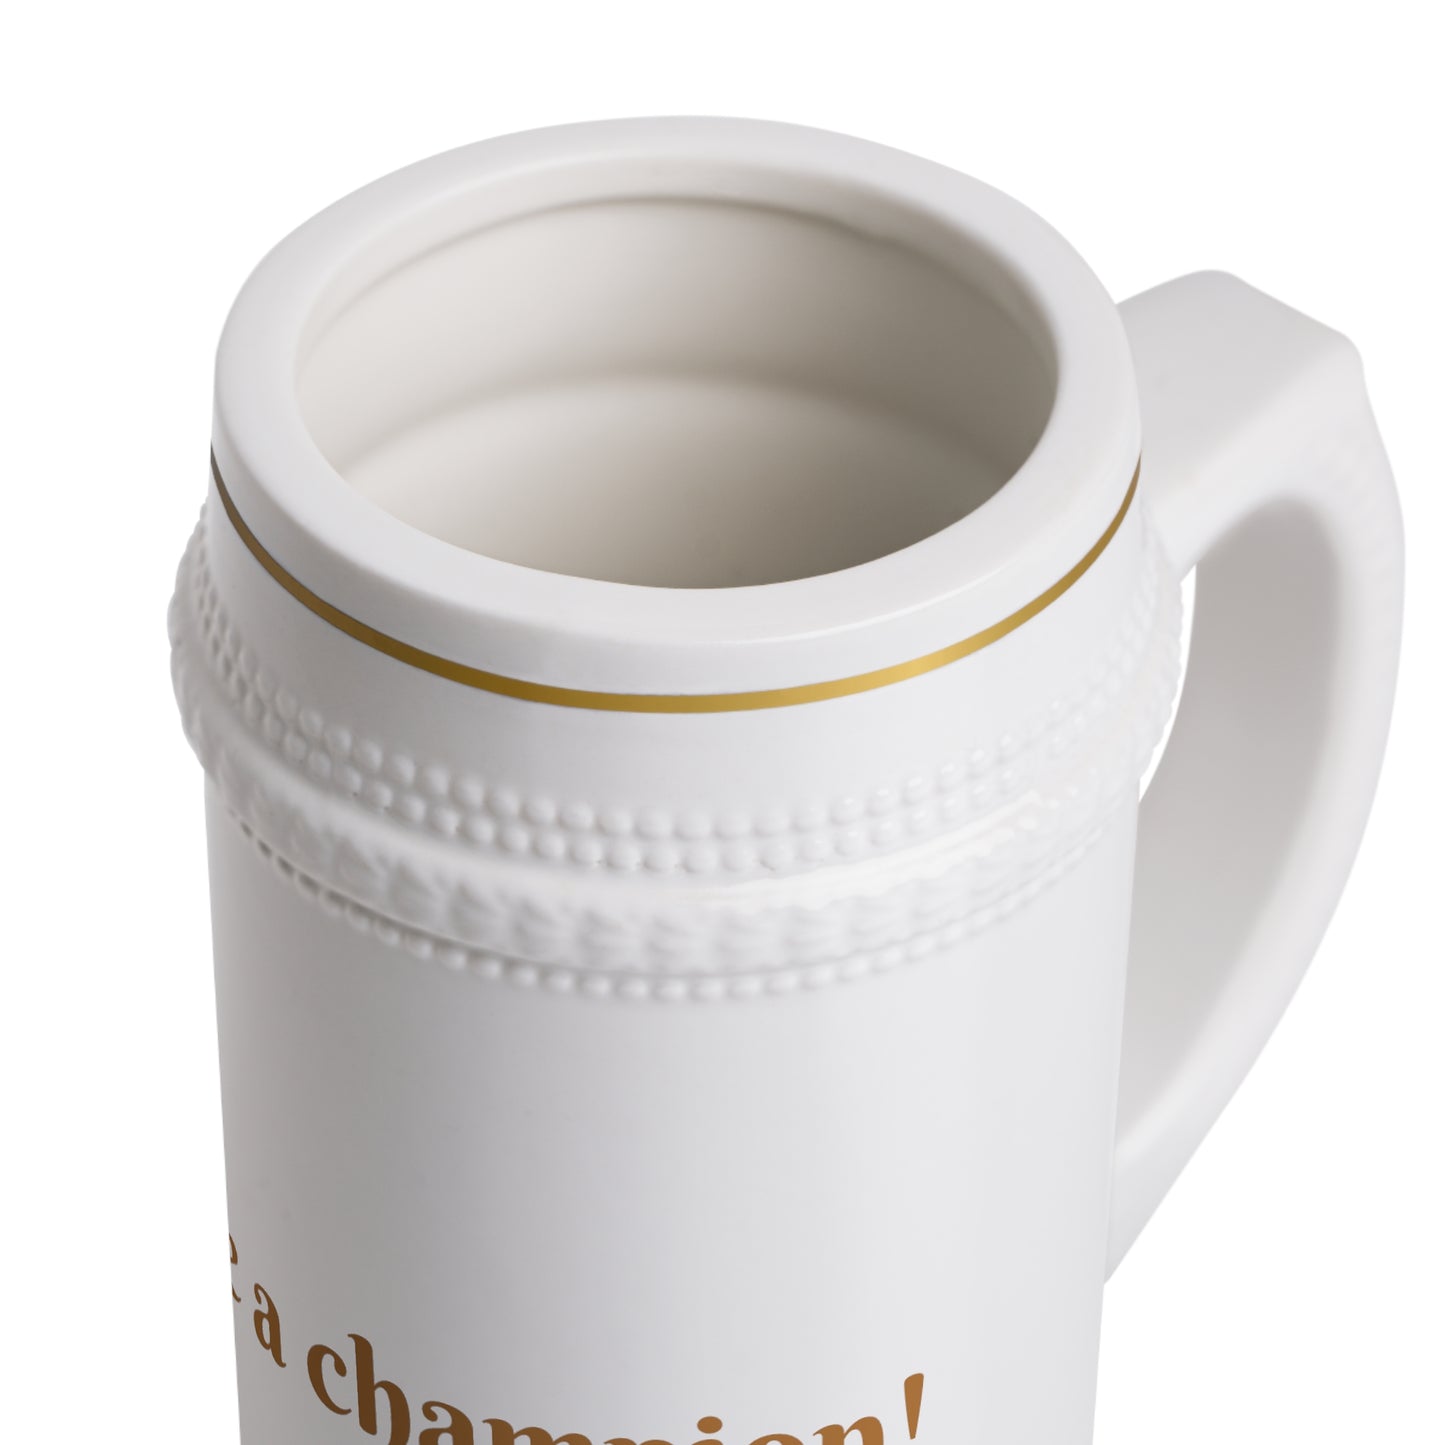 You're a champion mug